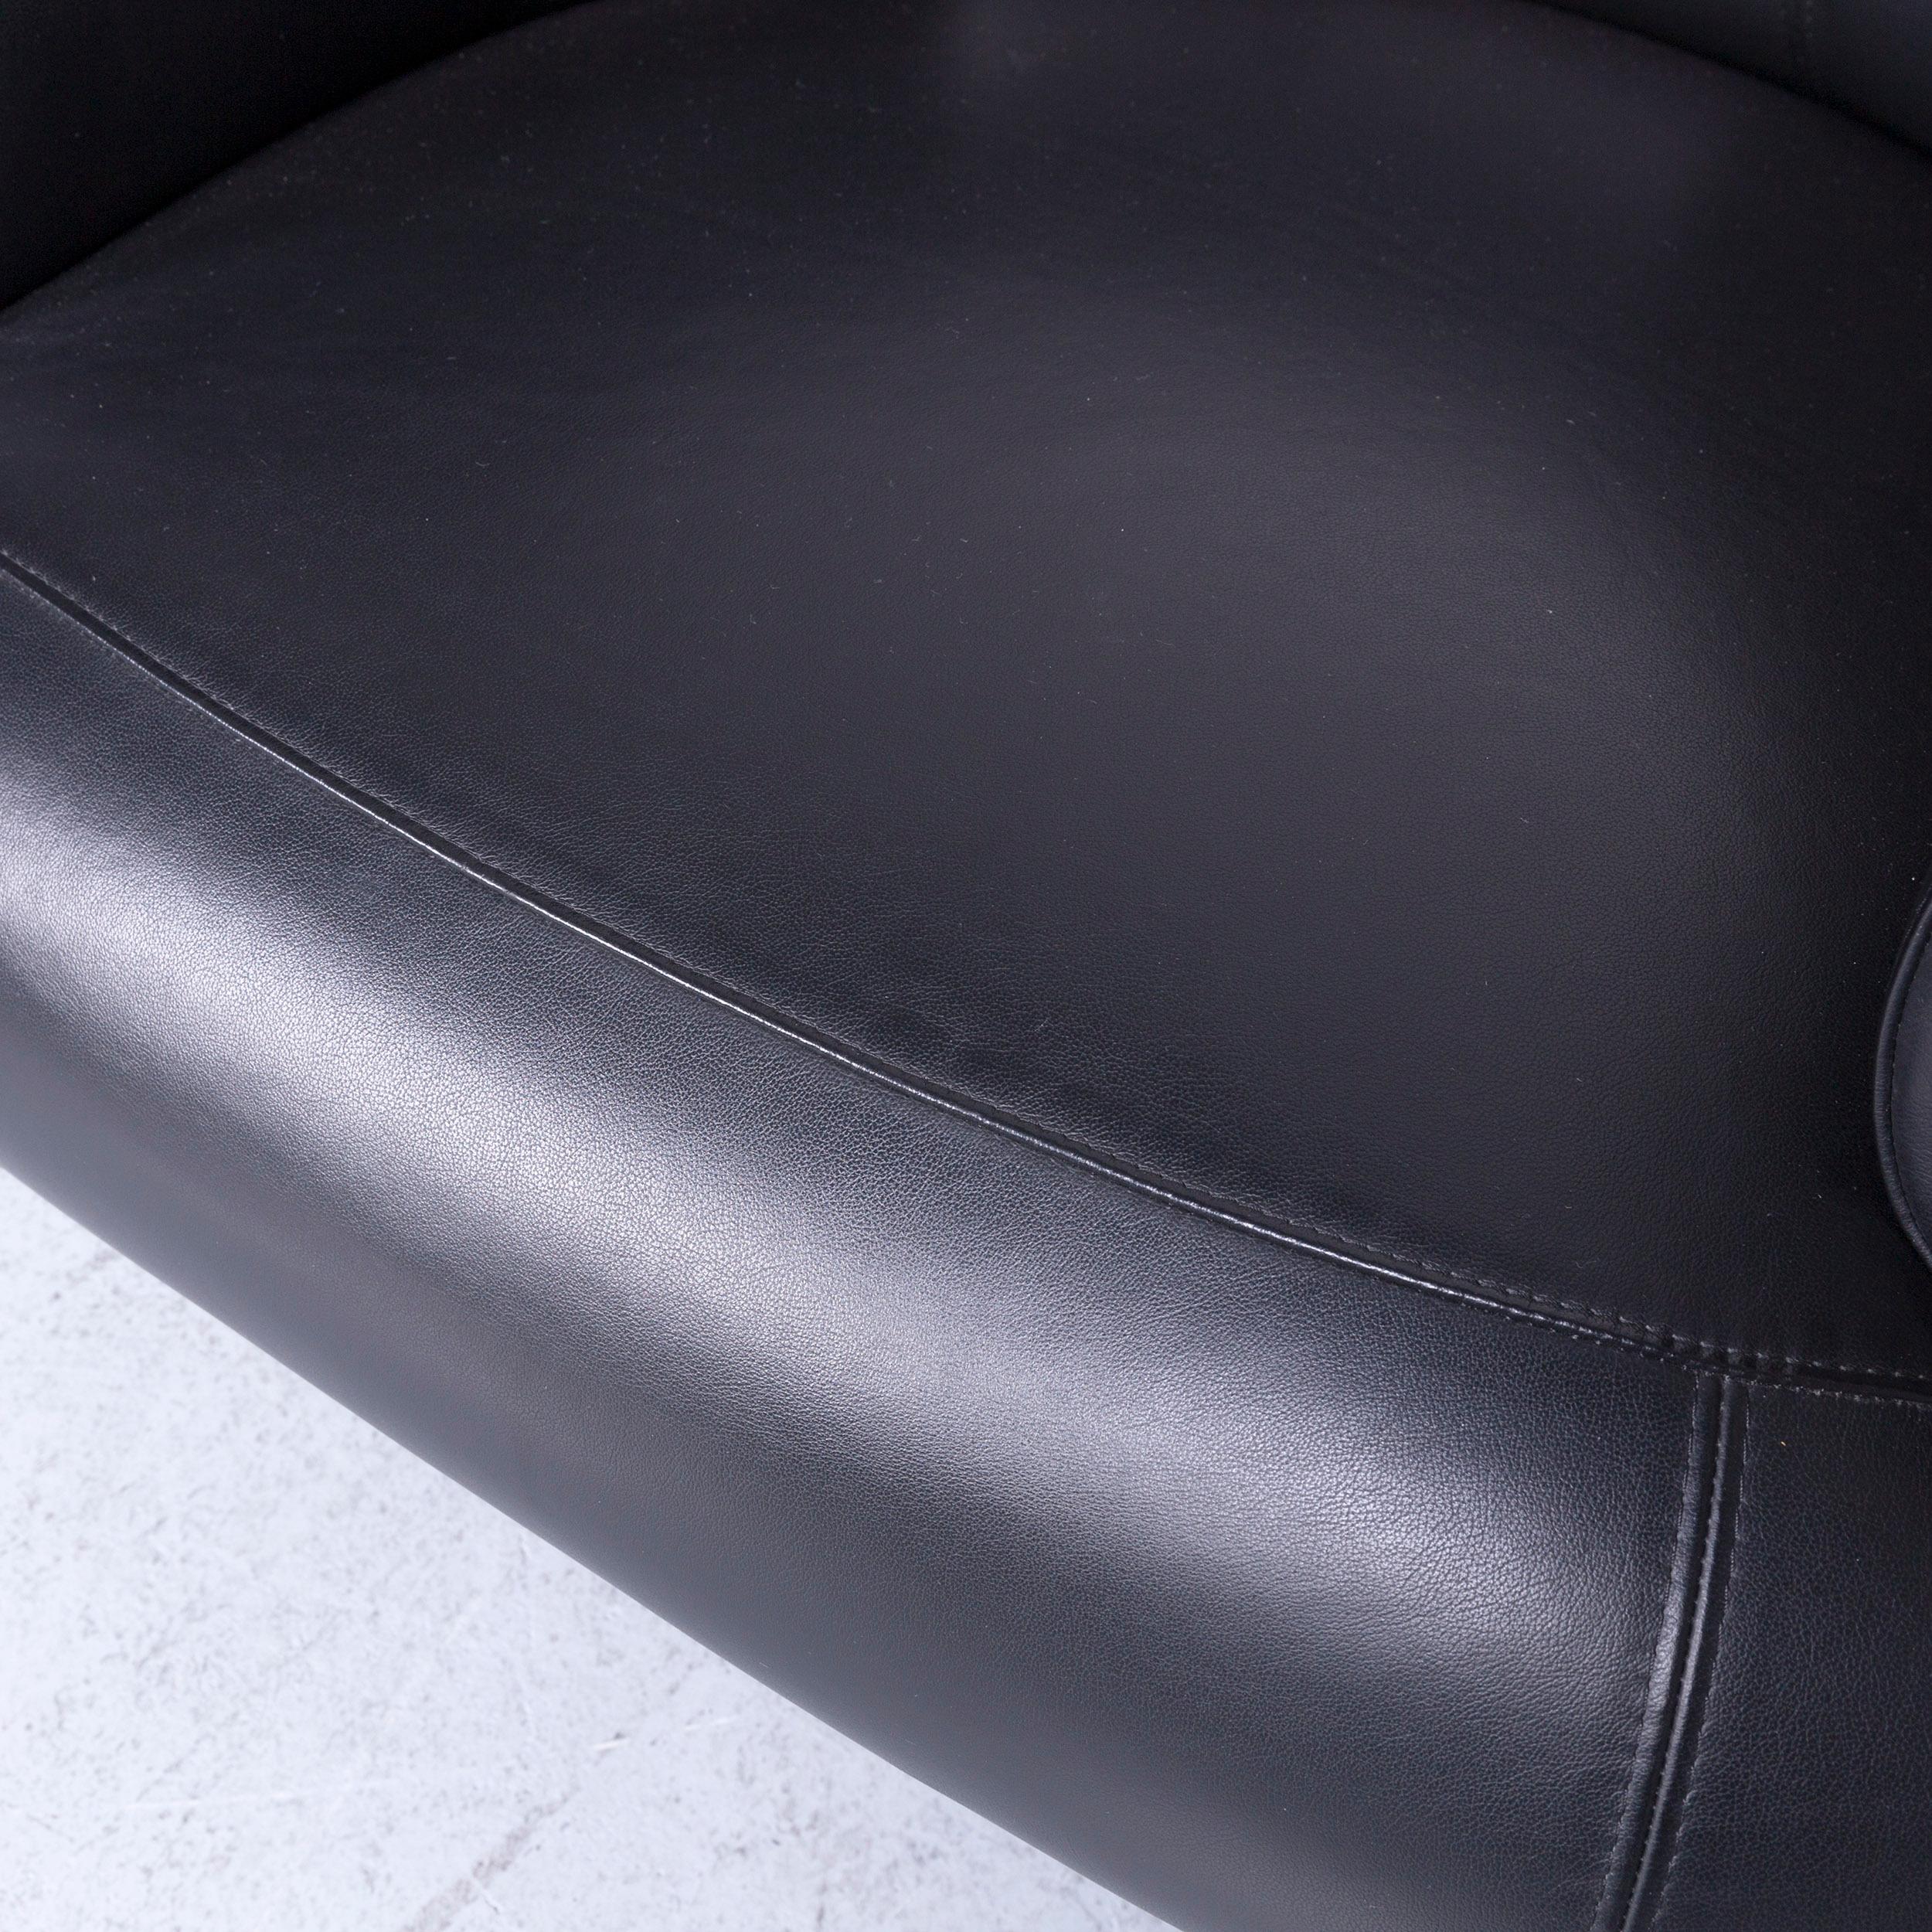 ClassiCon Bibendum Chair Designer Leather Armchair Black In Good Condition For Sale In Cologne, DE